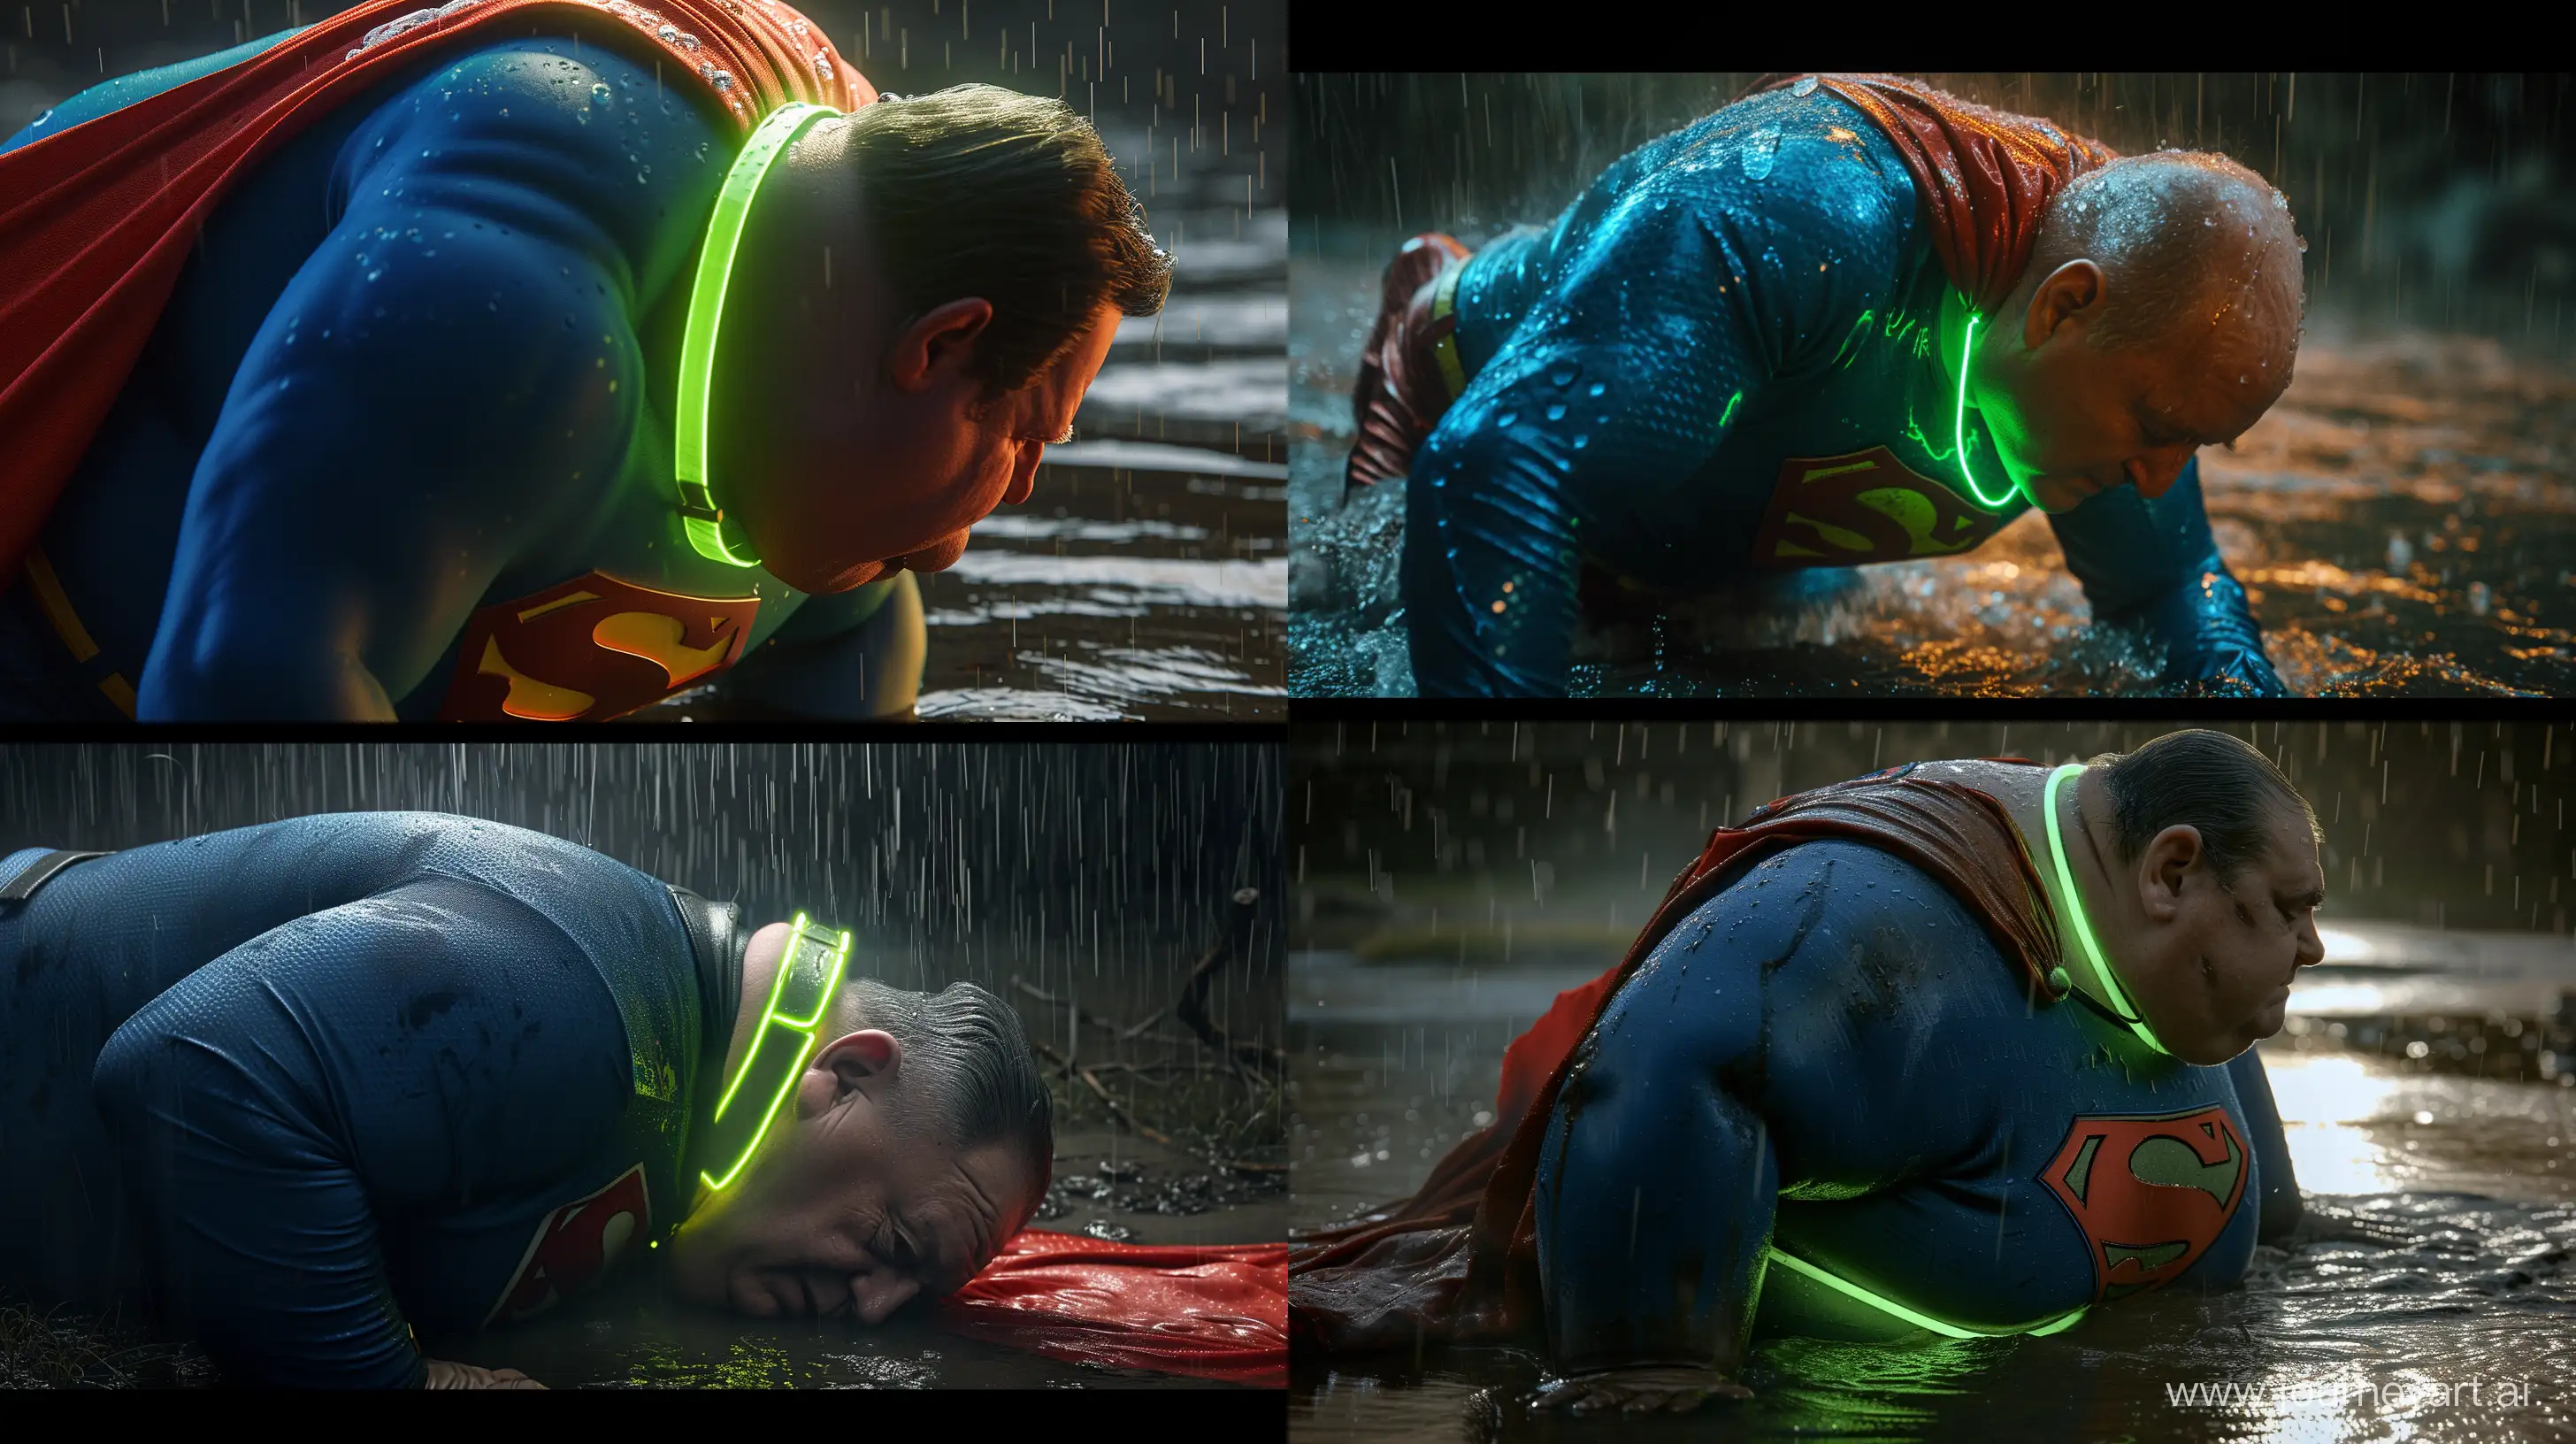 Eccentric-French-Policeman-Tightening-Neon-Dog-Collar-on-RainCrawling-Superman